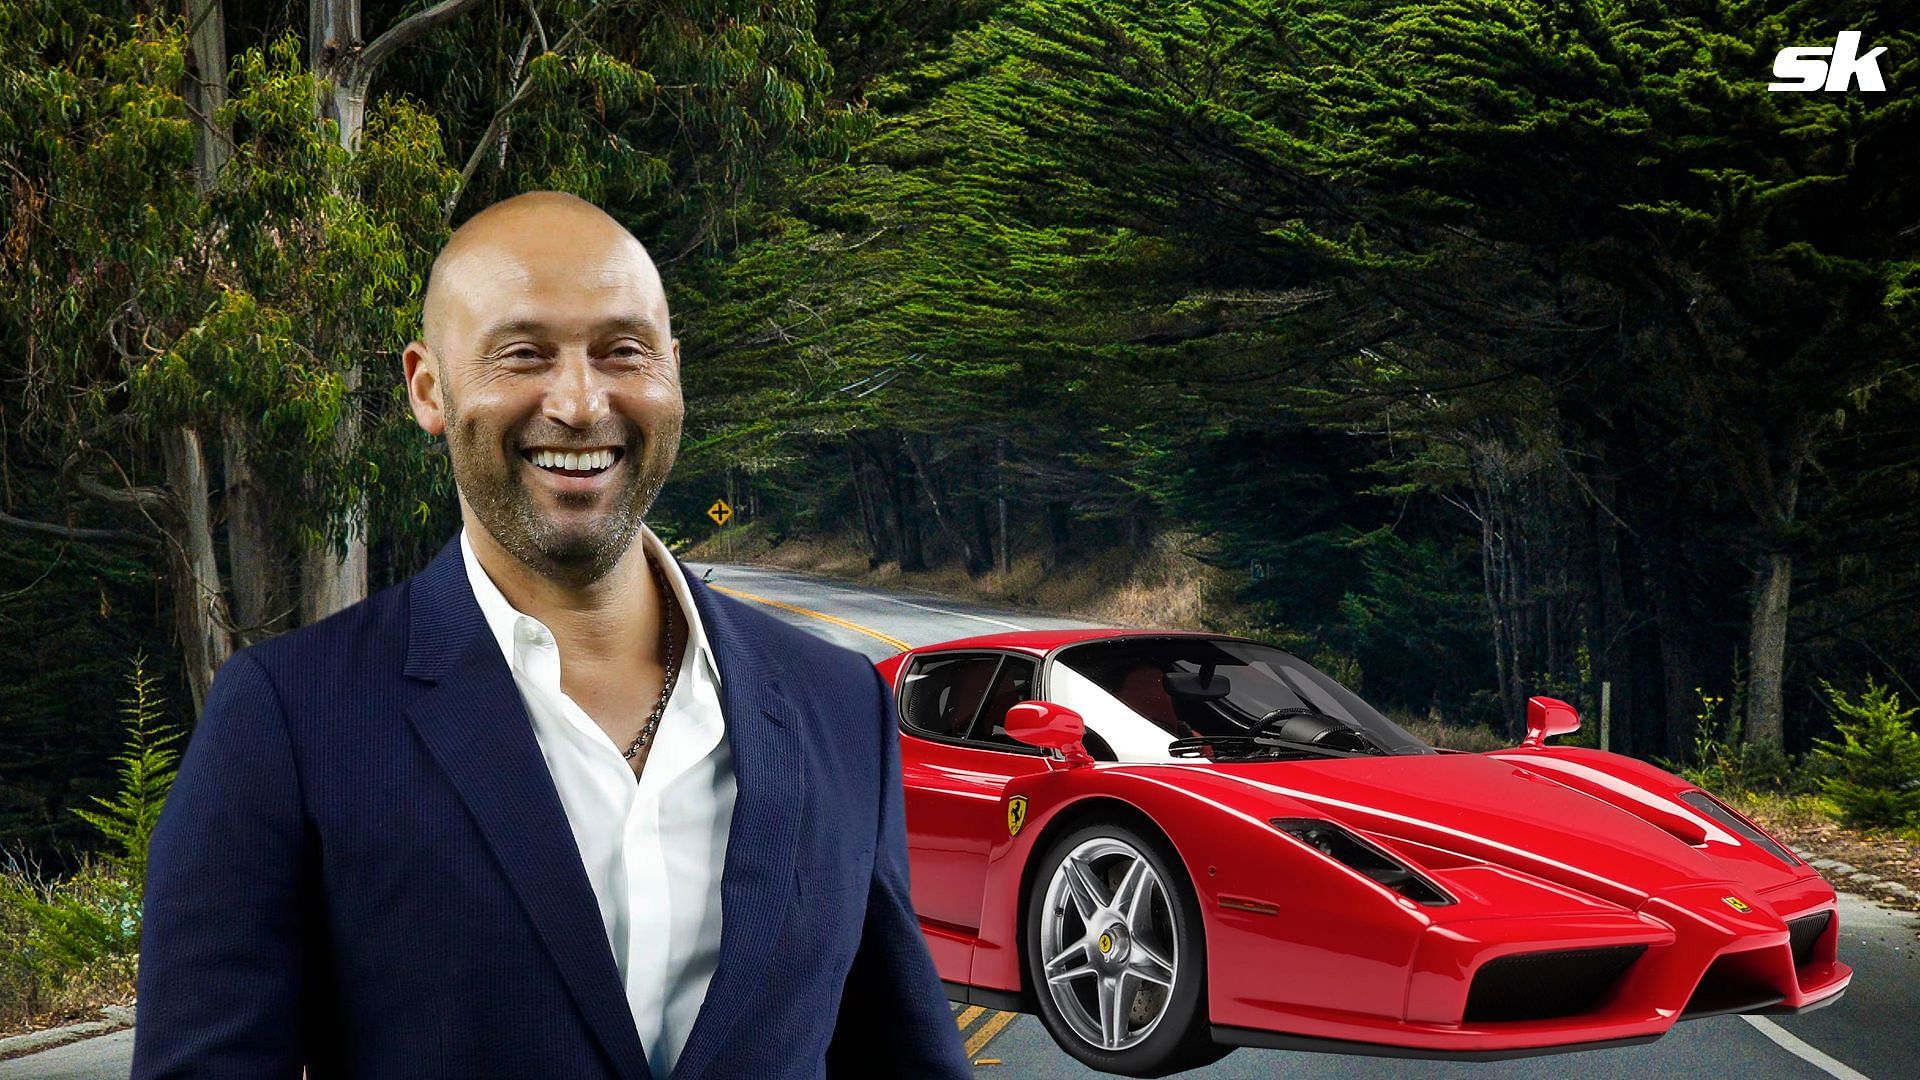 Derek Jeter owns an impressive car collection, including a head-turning Ferrari Enzo